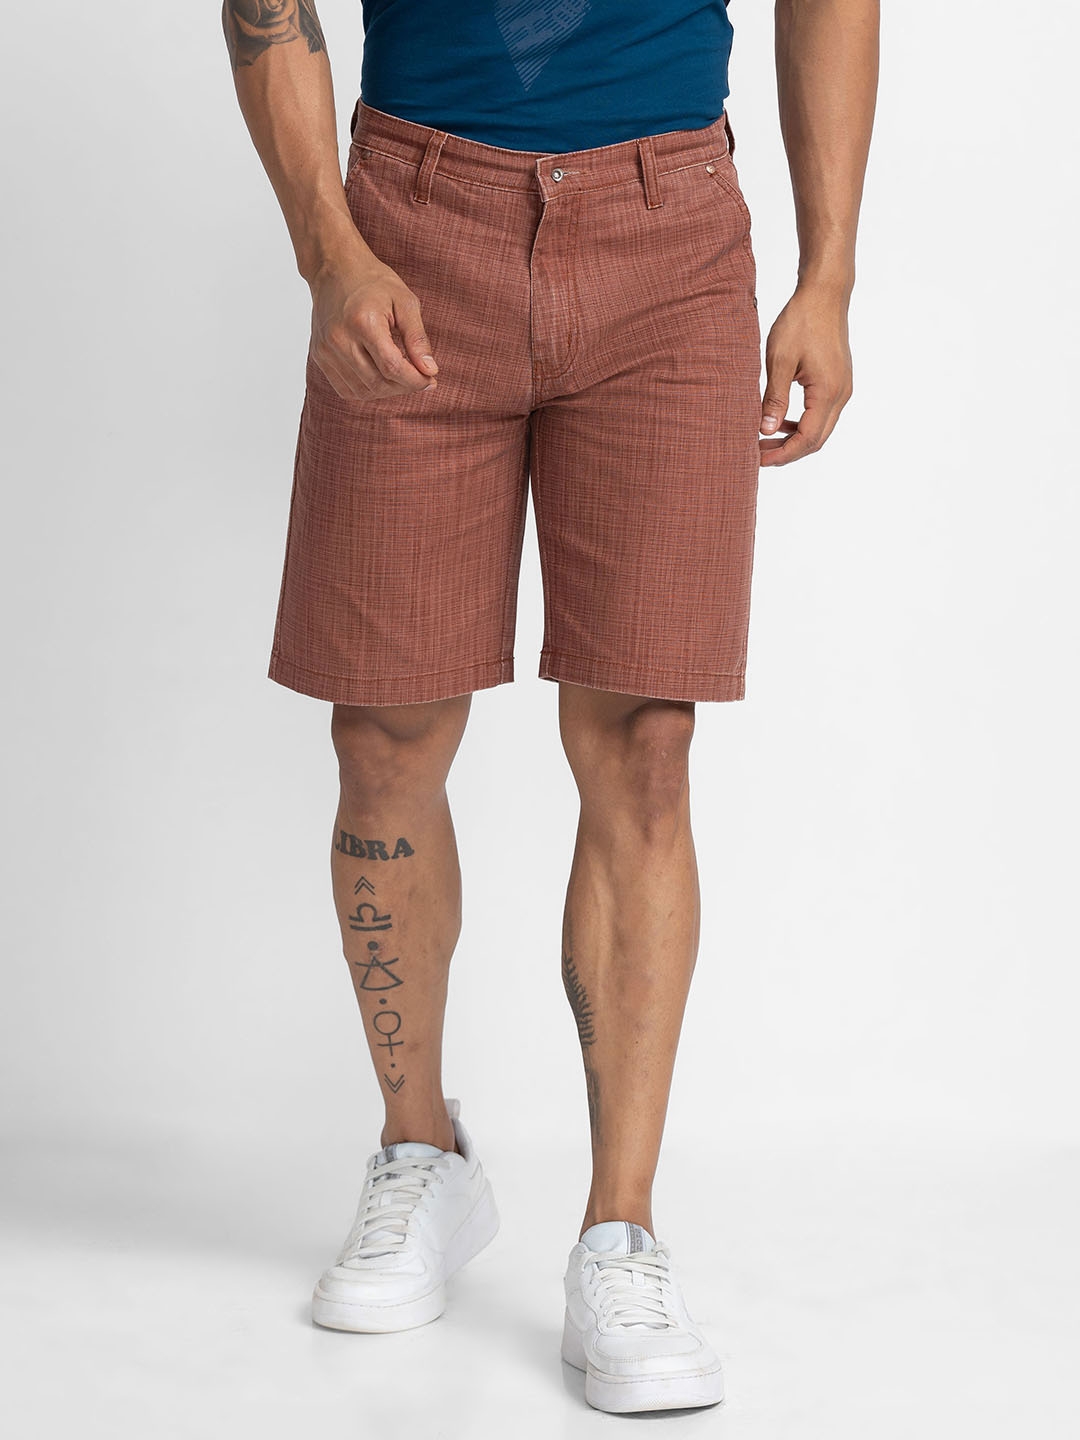 globus | Men's Brown Cotton Solid Shorts 0